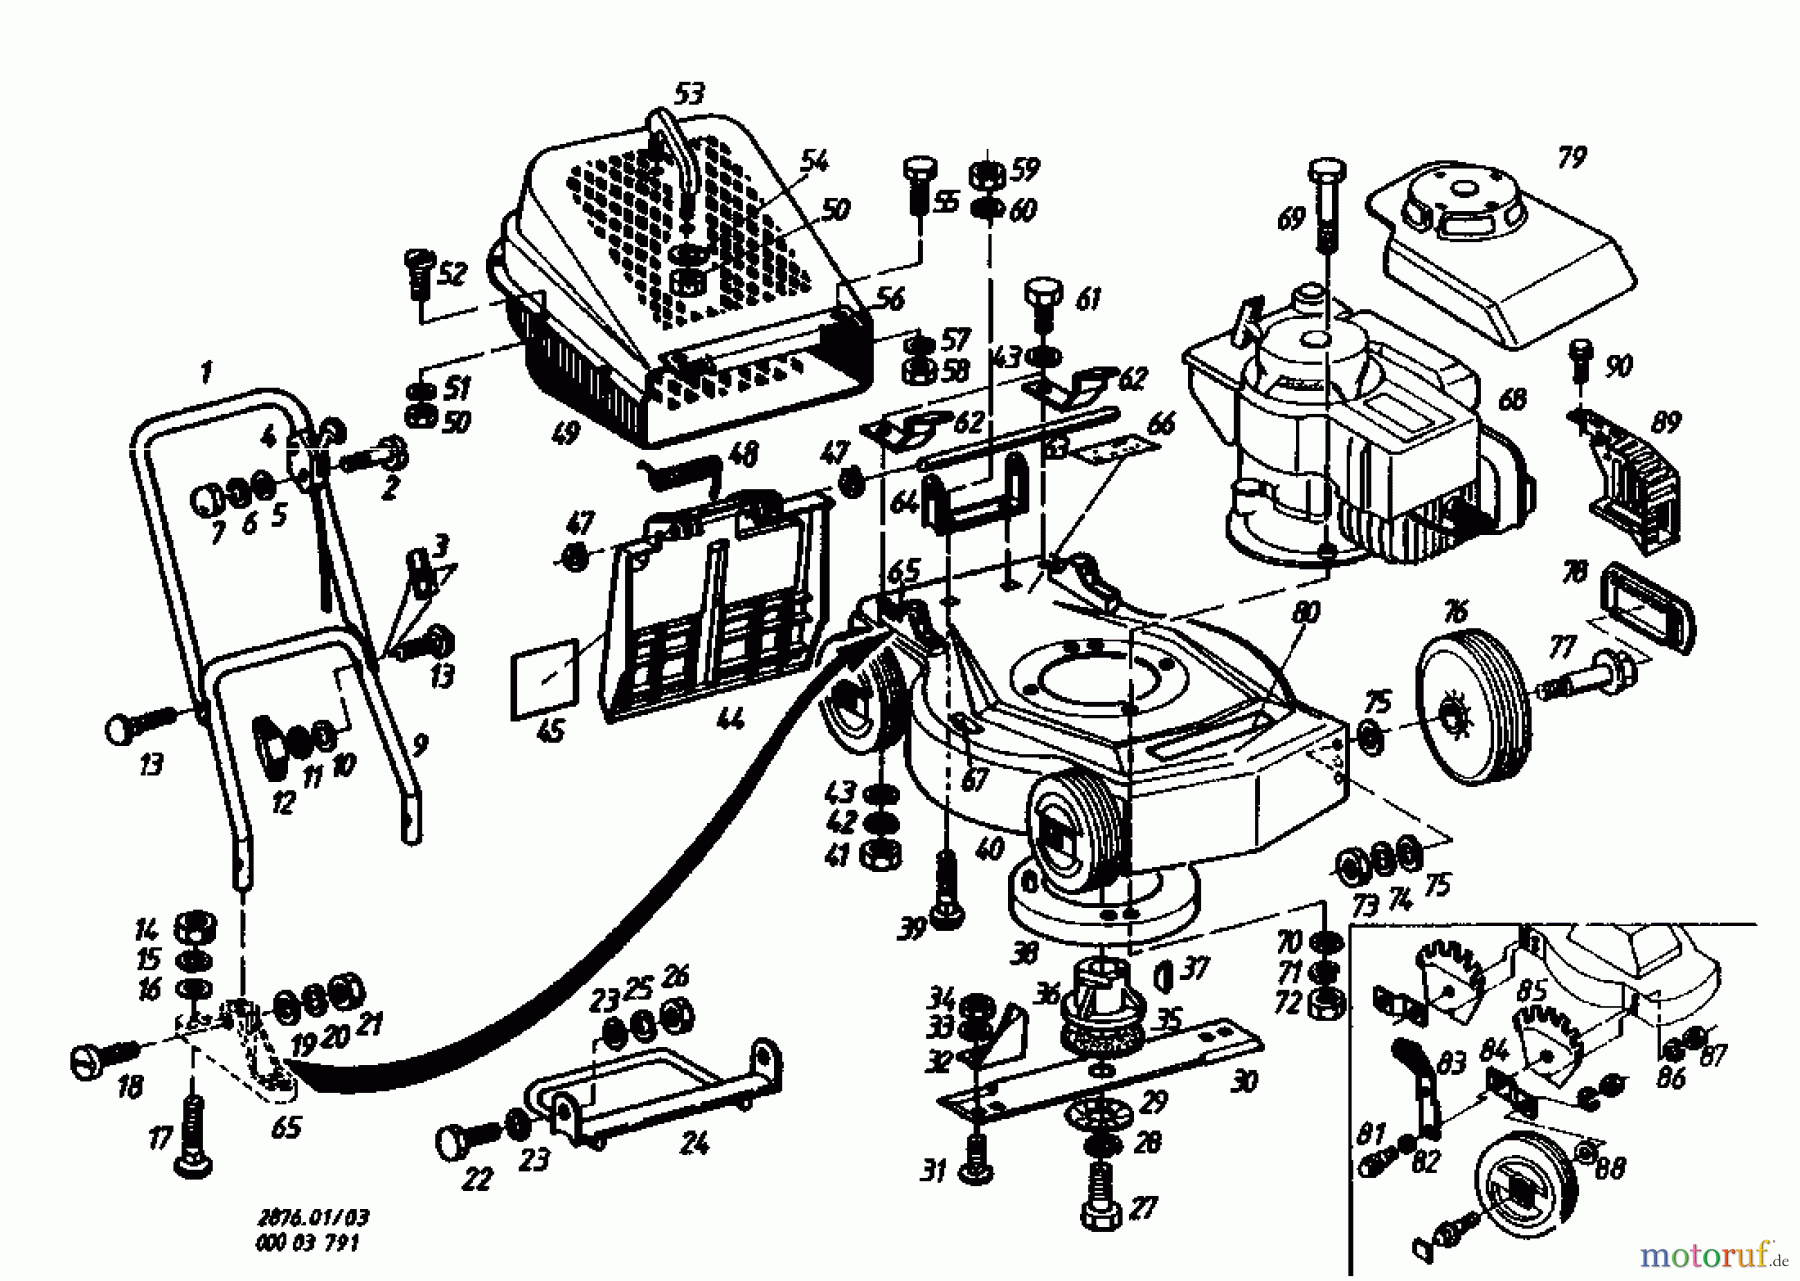  Gutbrod Tondeuse thermique TURBO 45 B 02876.01  (1985) Machine de base